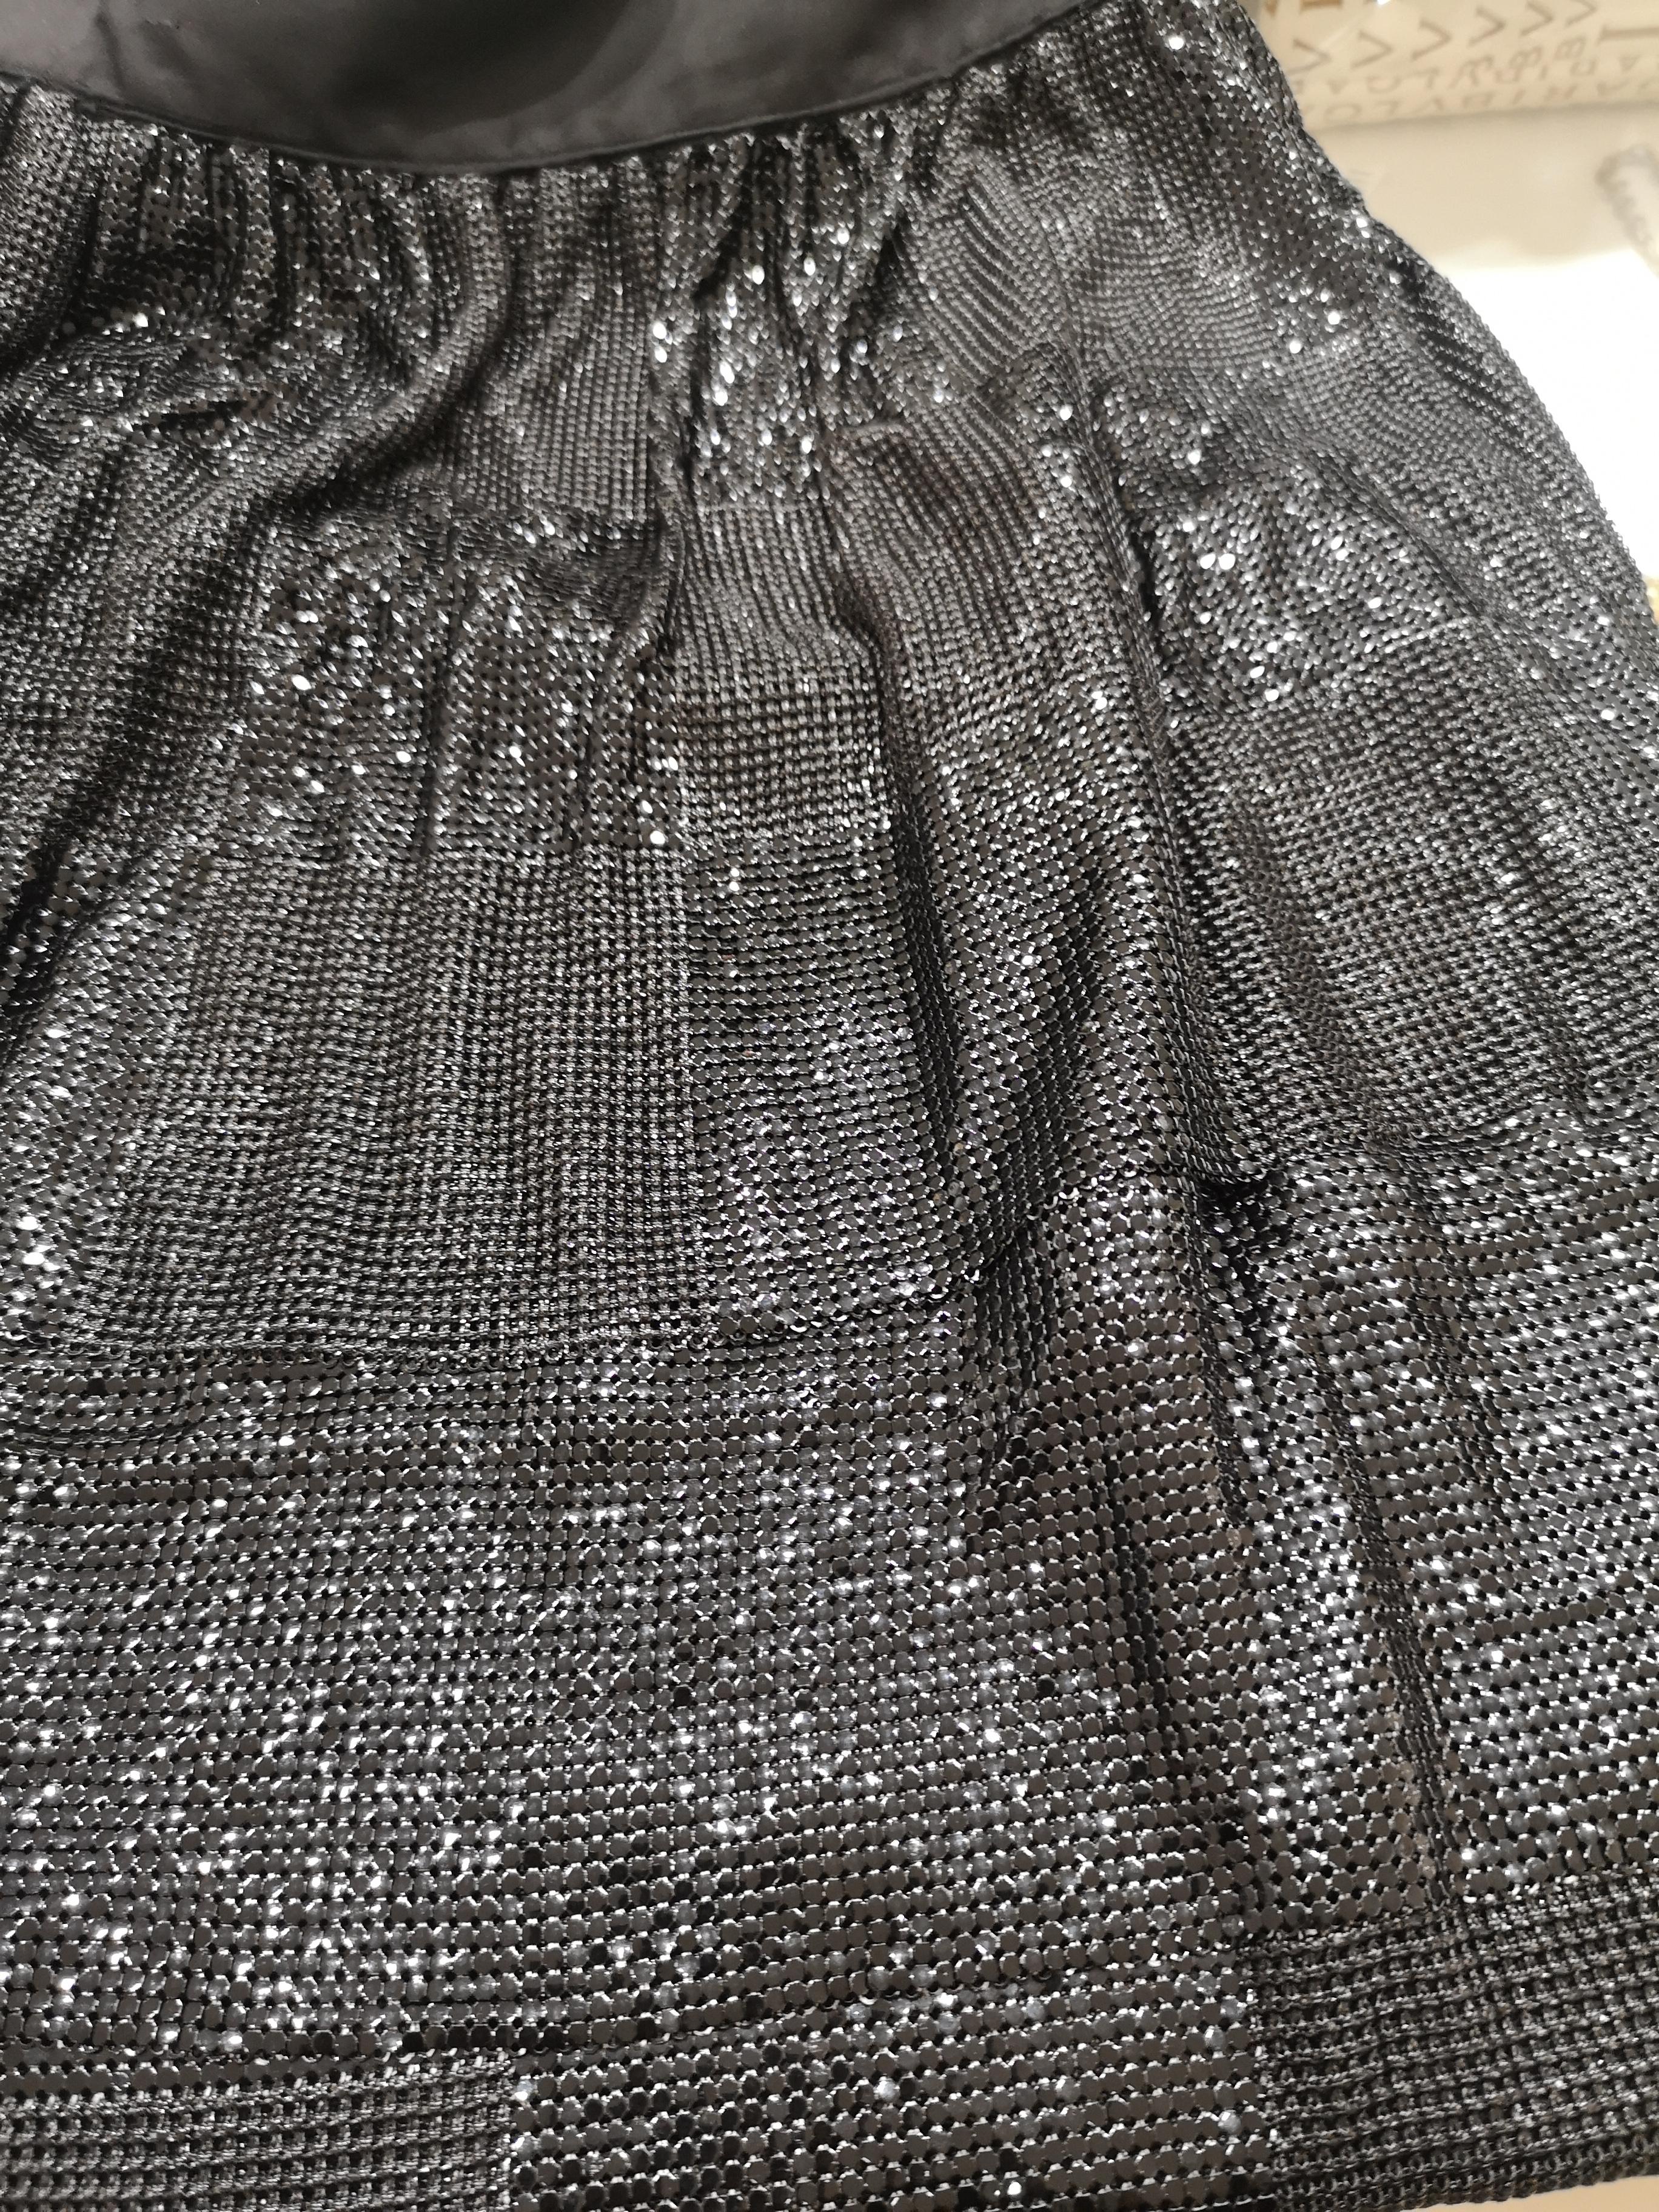 Gianni Versace black Skirt For Sale 4